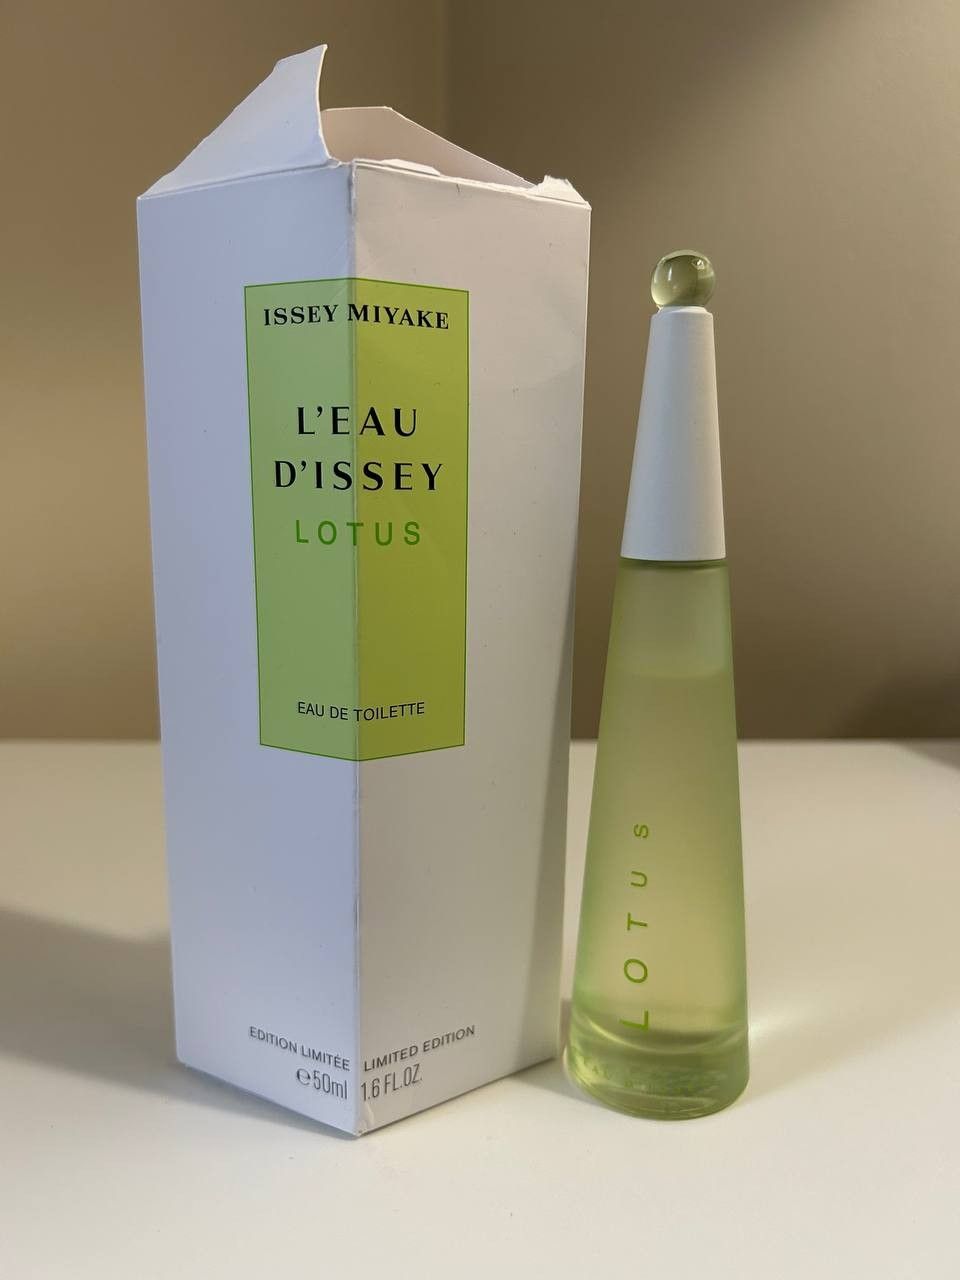 Issey Miyake L’eau D’issey Lotus limited edition de parfum 50ml hajuvesi